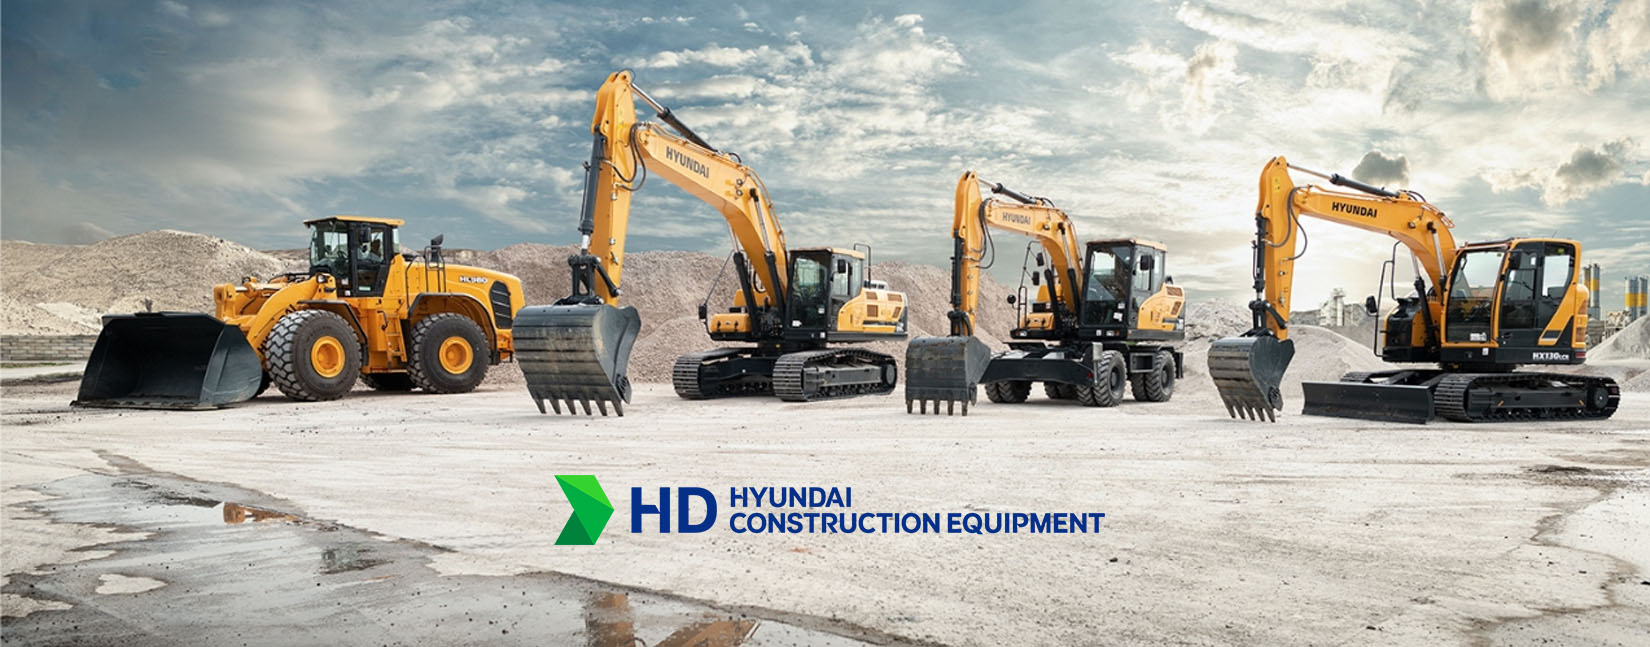 Logo Hyundai Construction equpiment